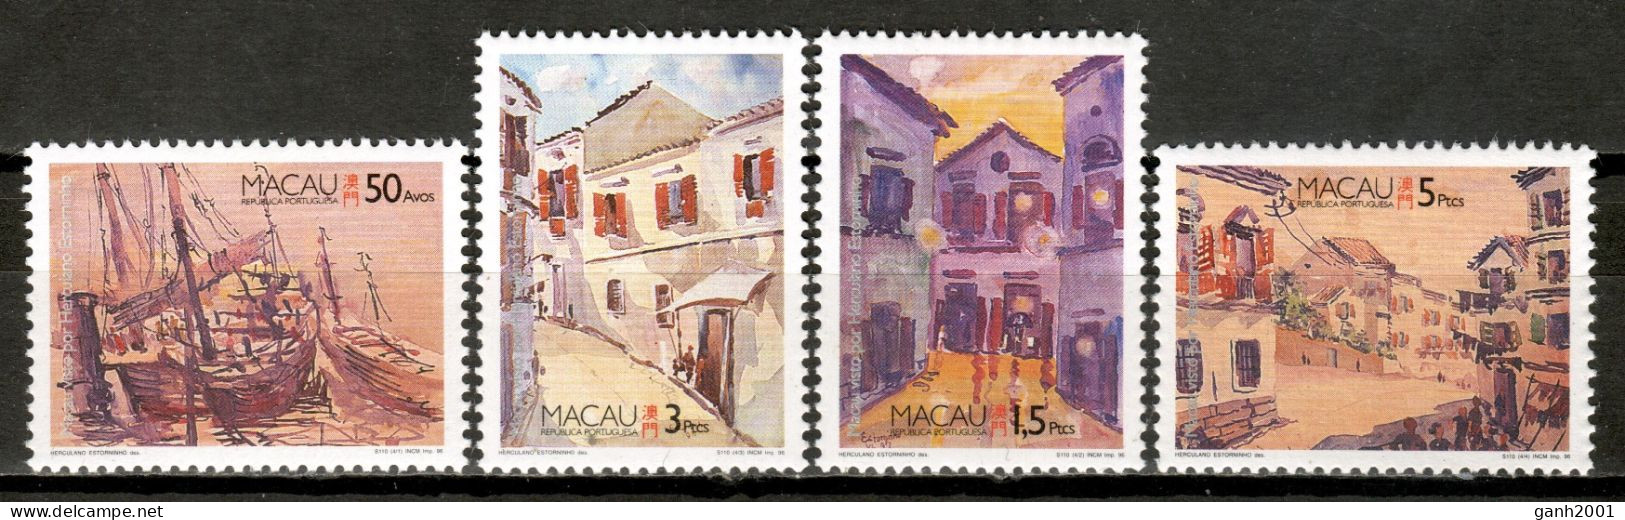 Macau 1996 Macao / Paintings Art Herculano Estorninho MNH Arte Pinturas Kunst / Ks03  33-36 - Modern